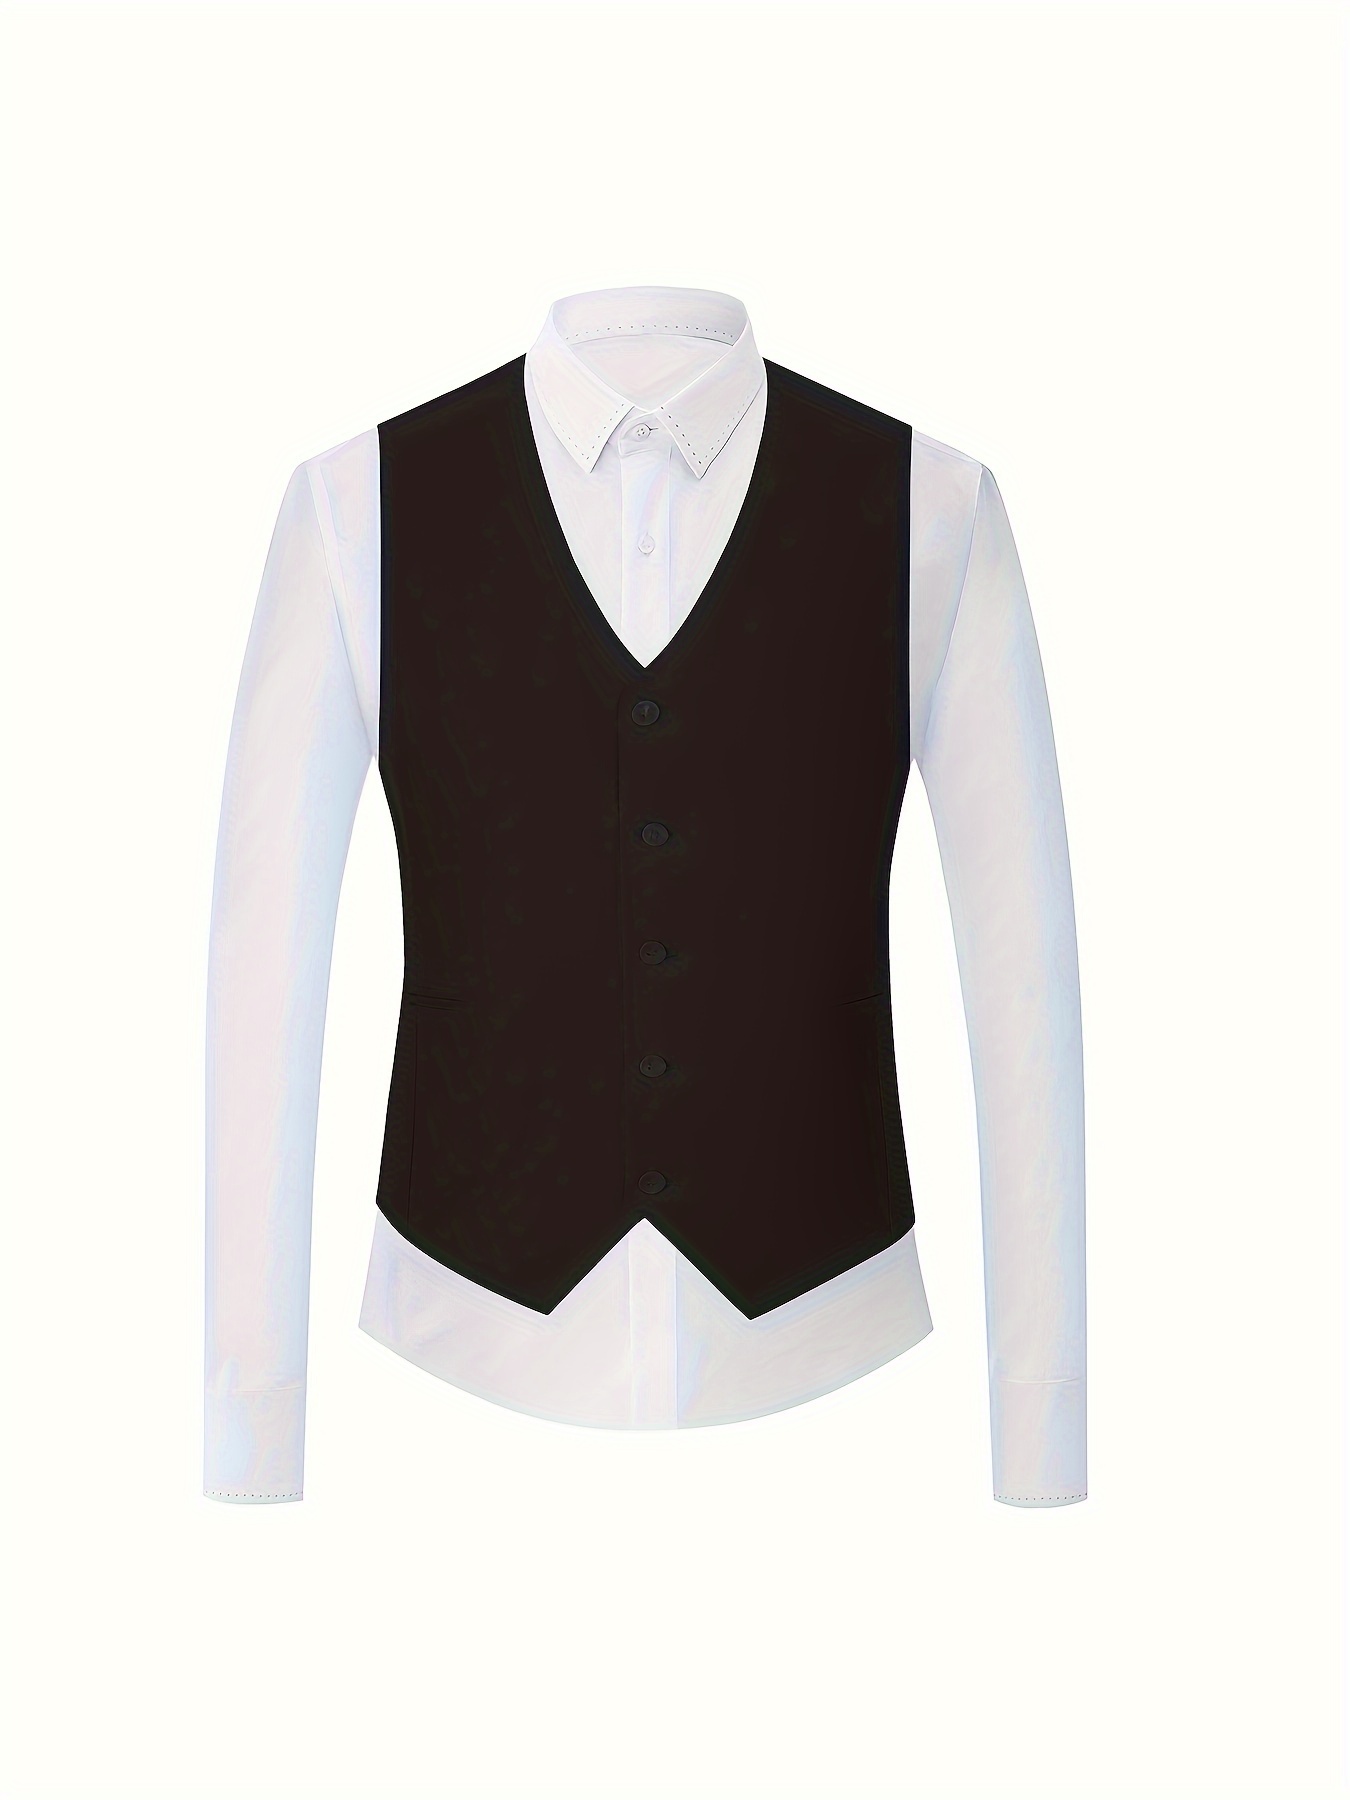 formal 3 pieces set mens chic suit jacket single breasted vest pants suit set for business banquet wedding party